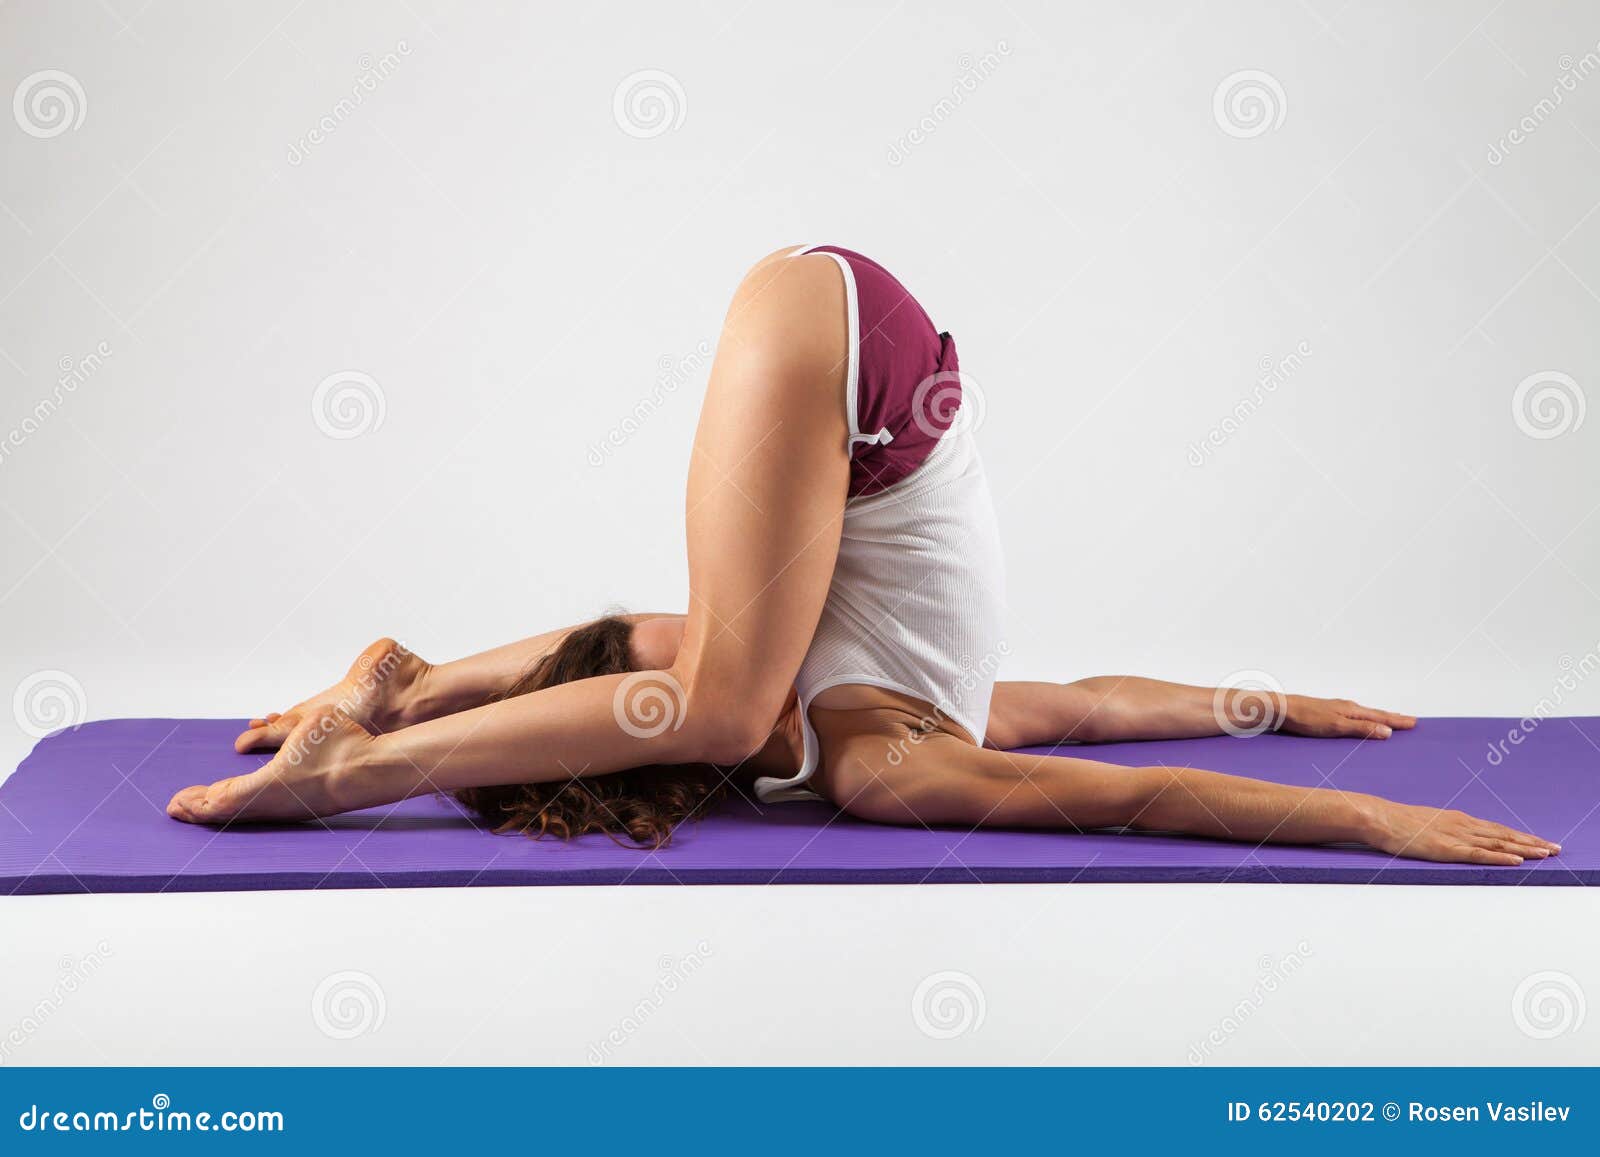 Sexy Woman Doing Yoga Exercises Stock Photo By ©RVAS 90483838